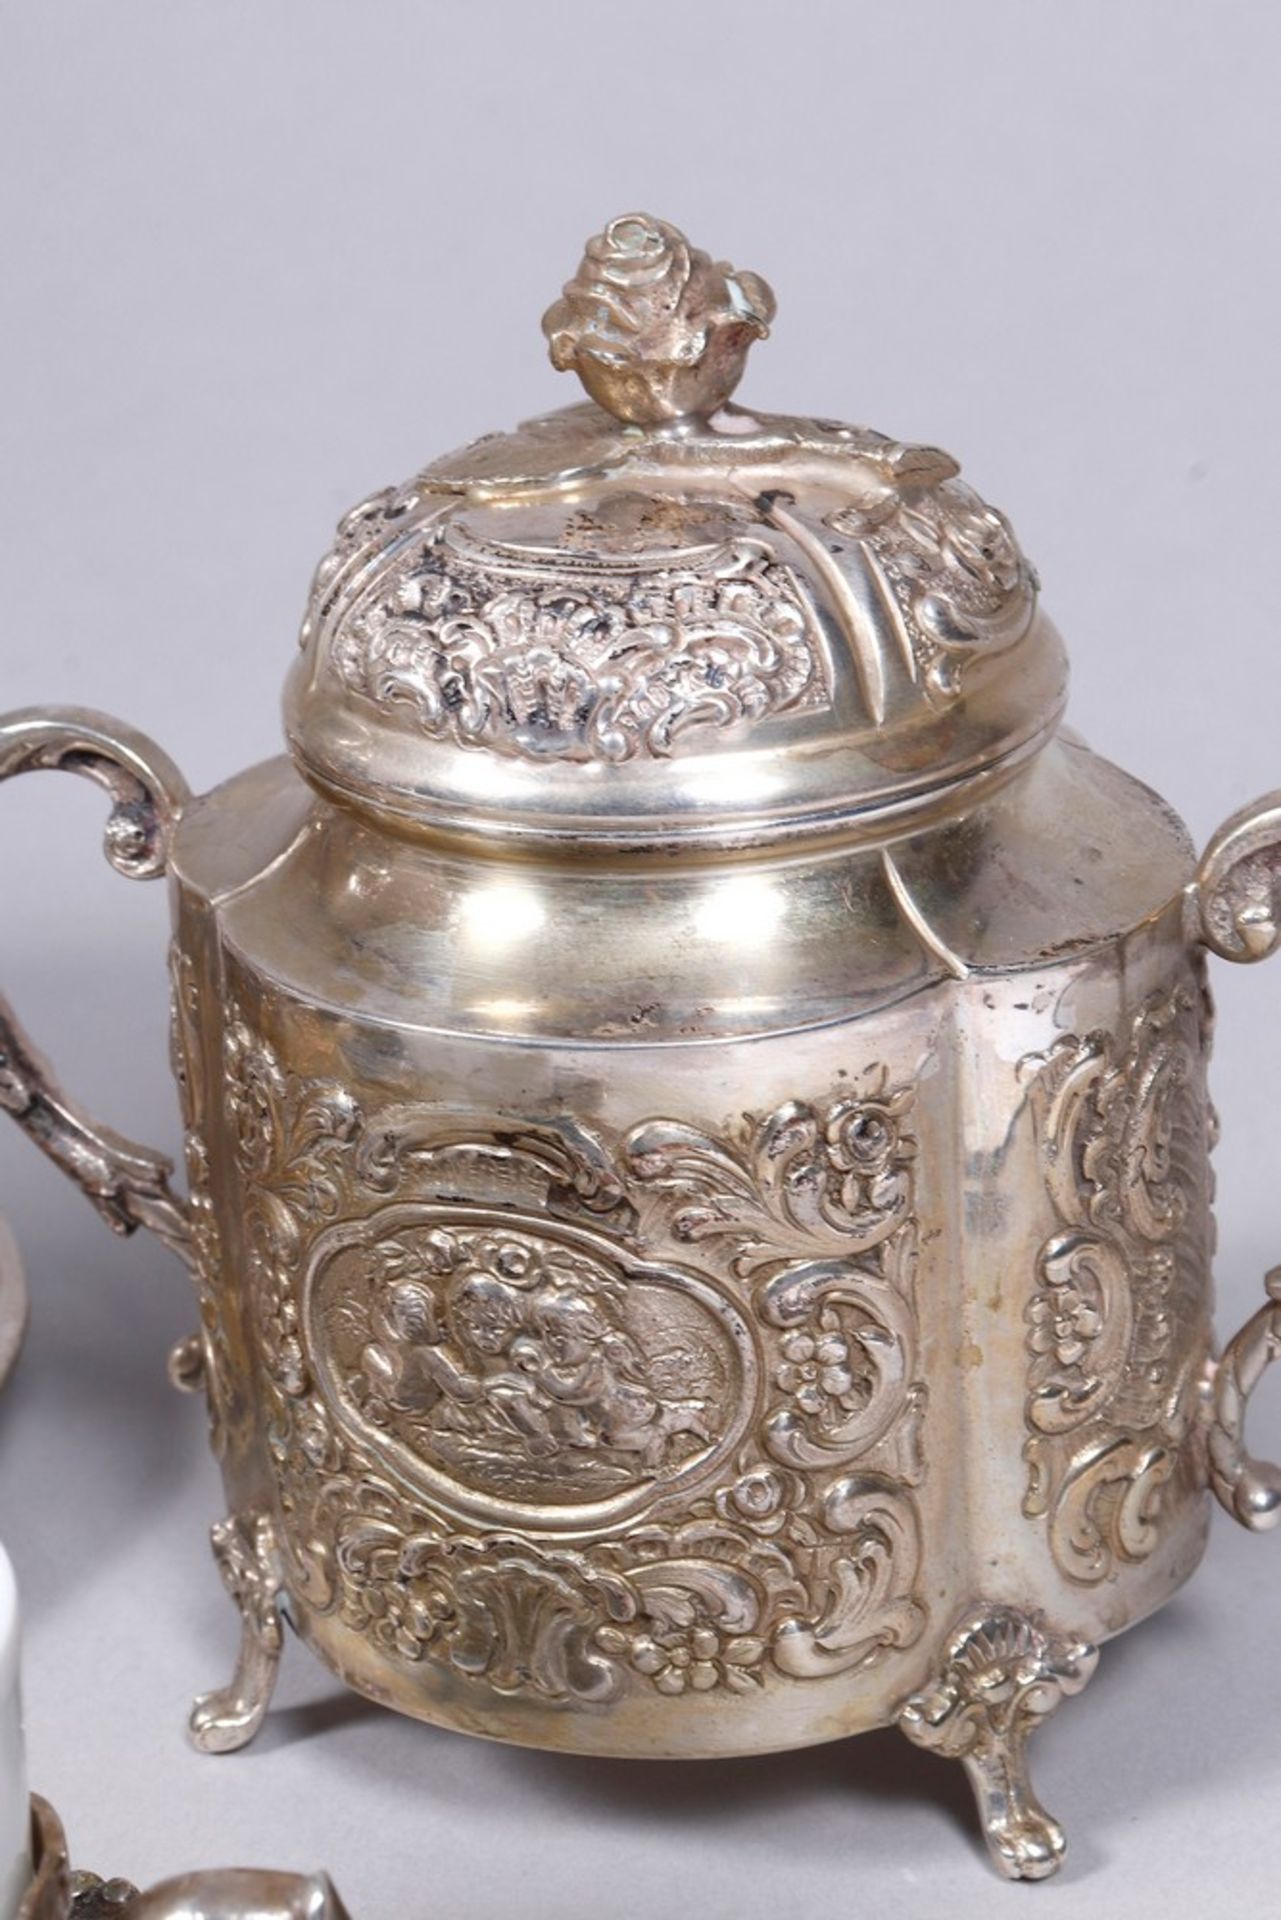 Mocha service, 800 silver/porcelain, Adolf Mayer, Frankfurt am Main, ca. 1900, 14 pieces - Image 4 of 6